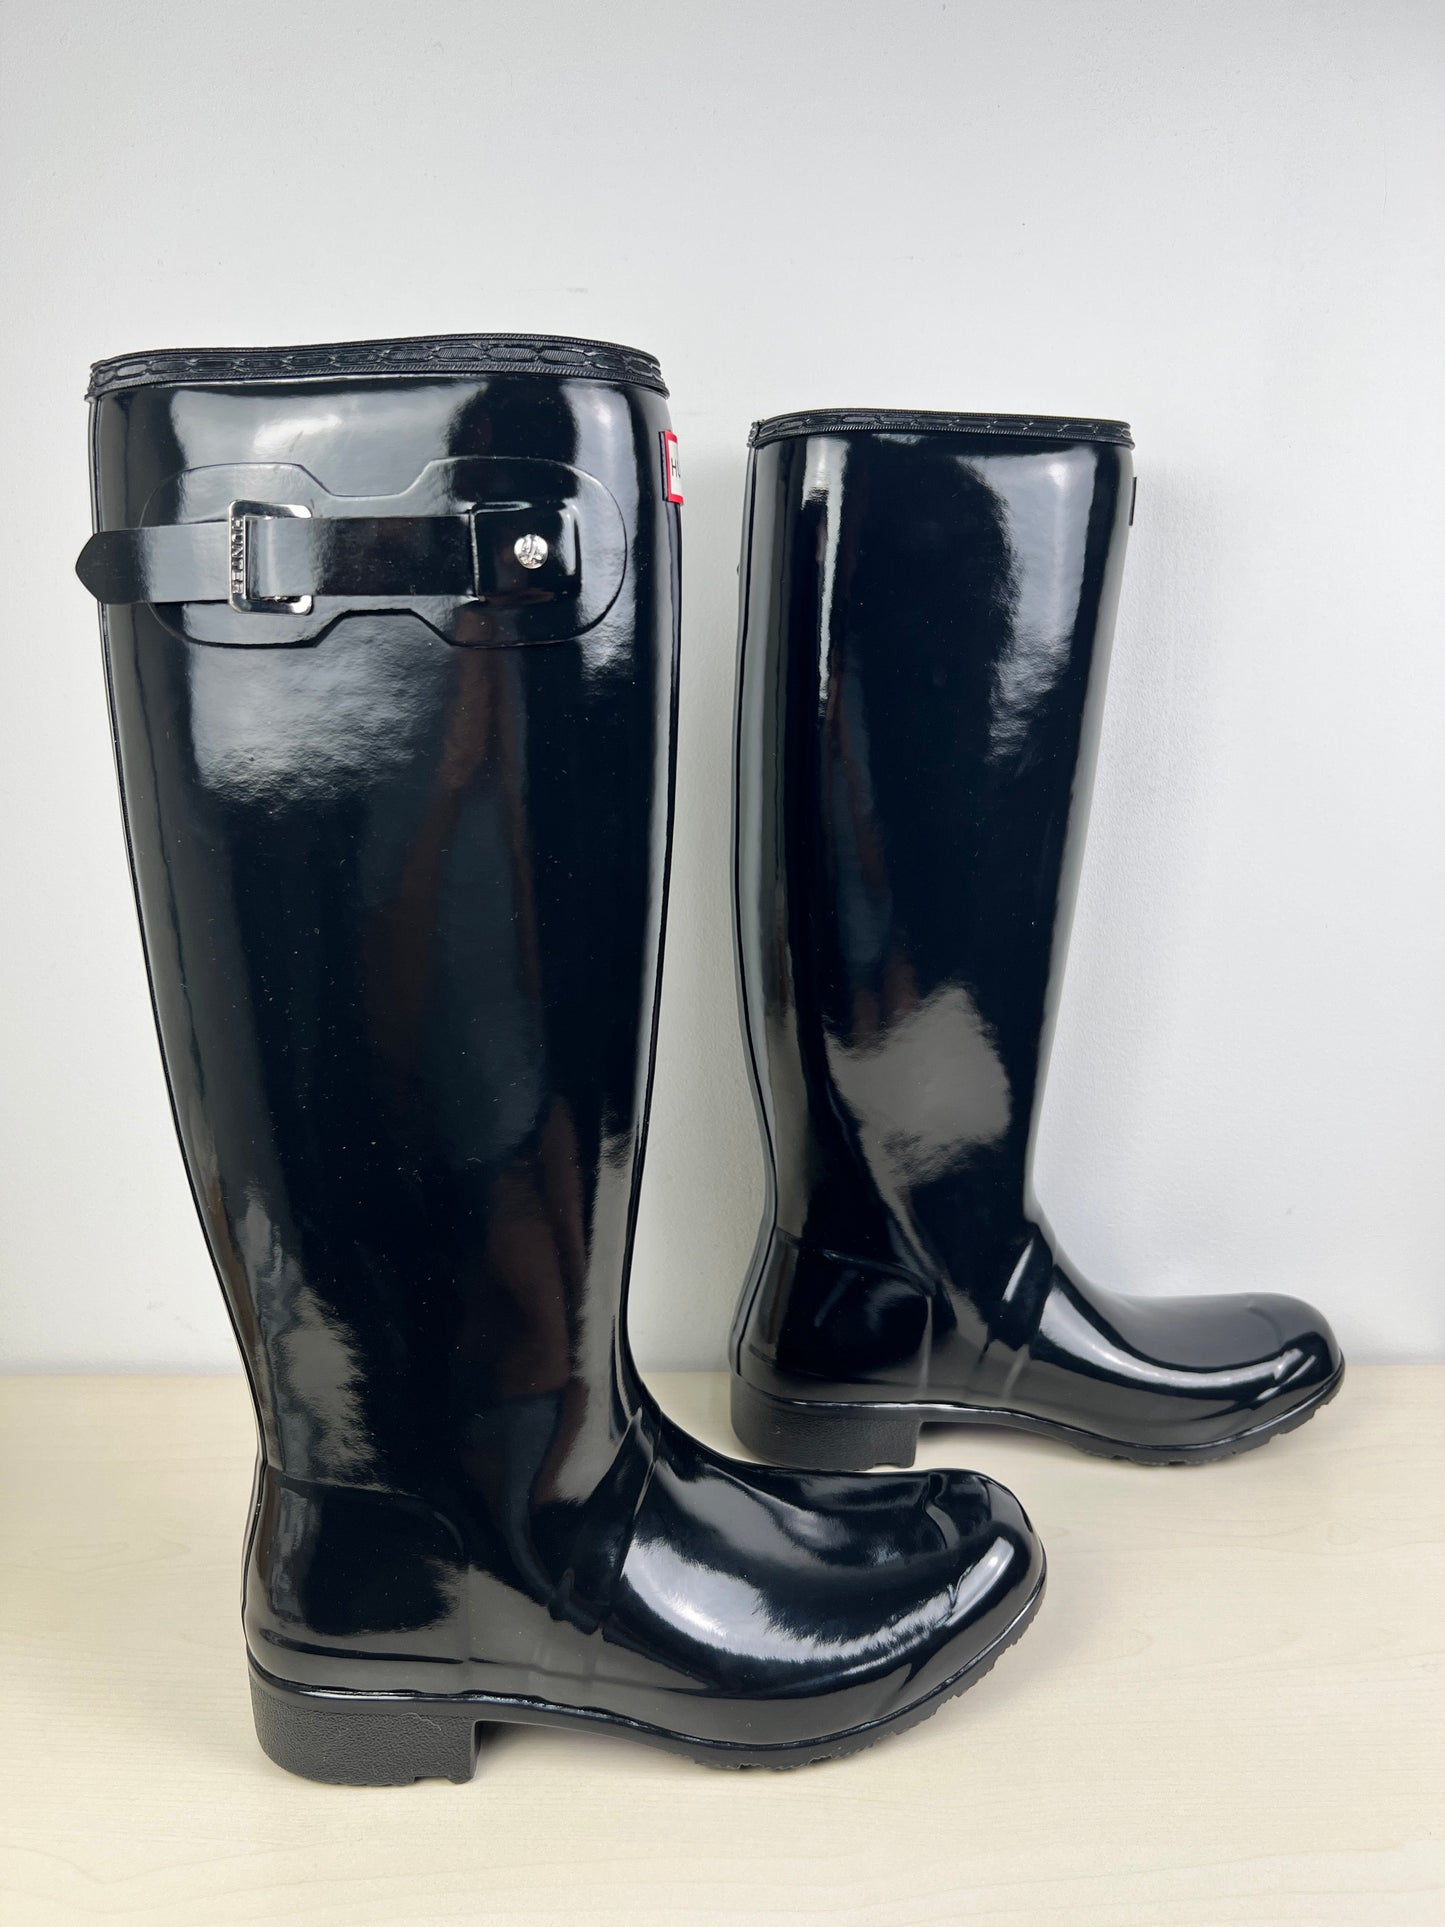 Black Boots Rain Hunter, Size 9